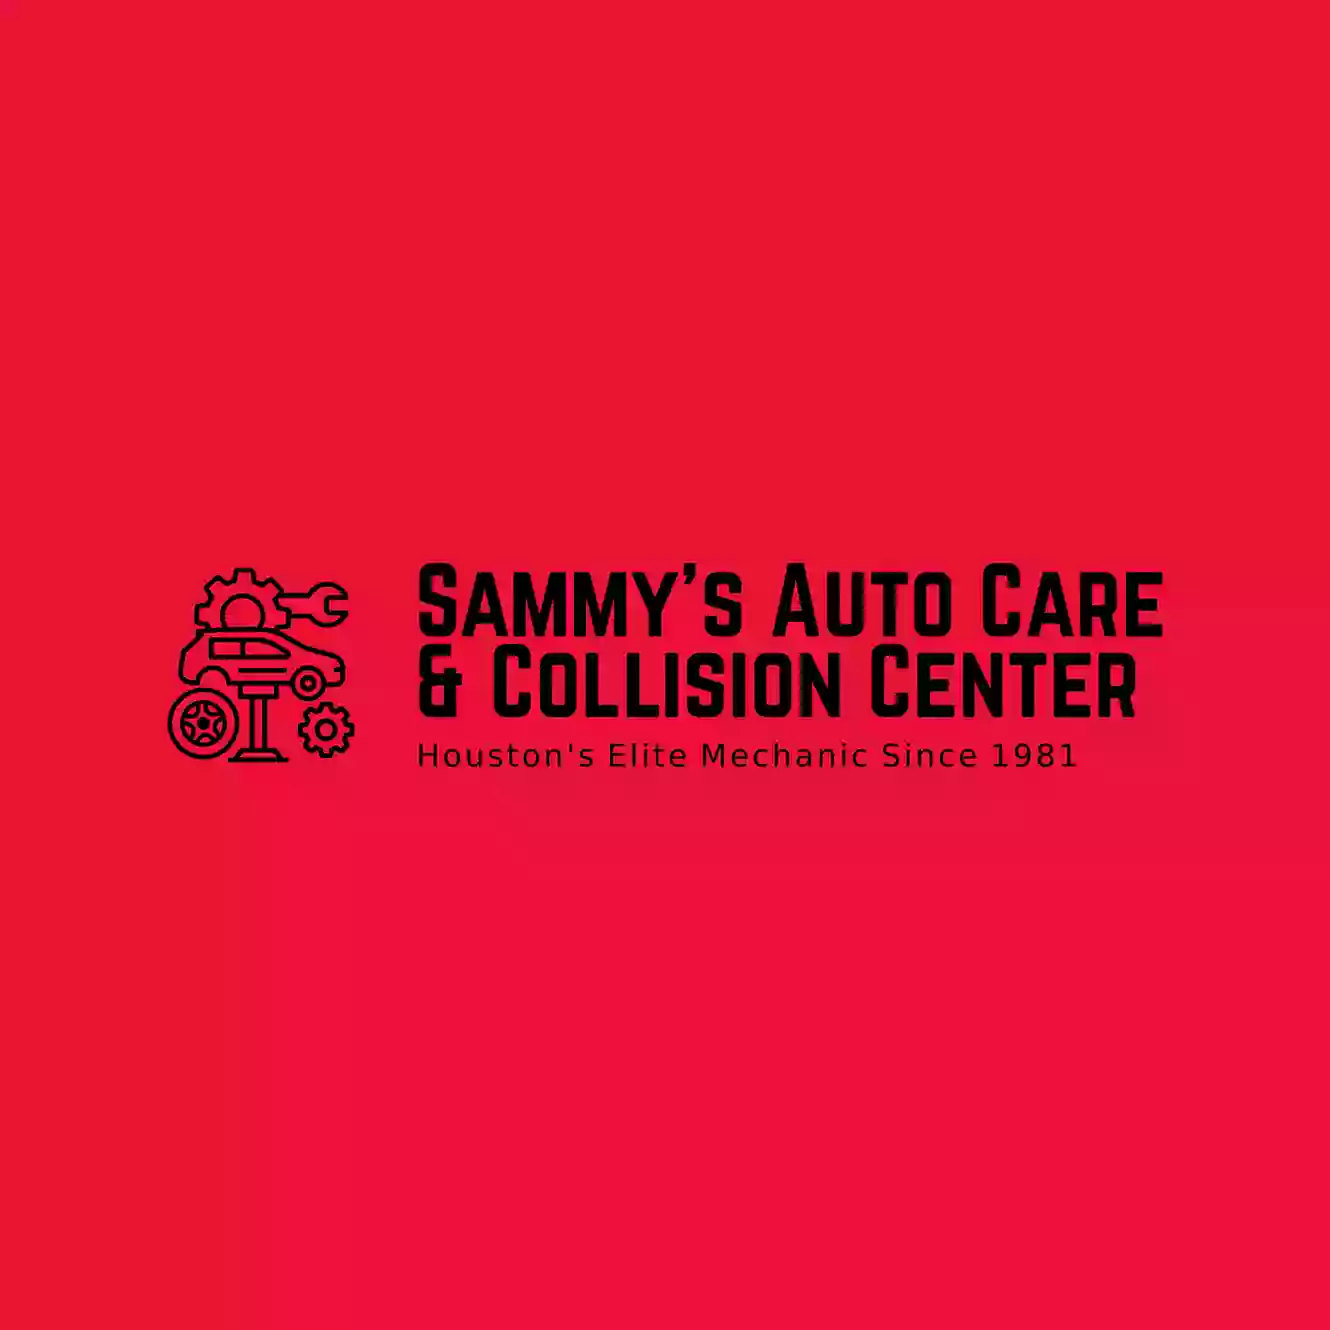 Sammy's Auto Care & Collision Center